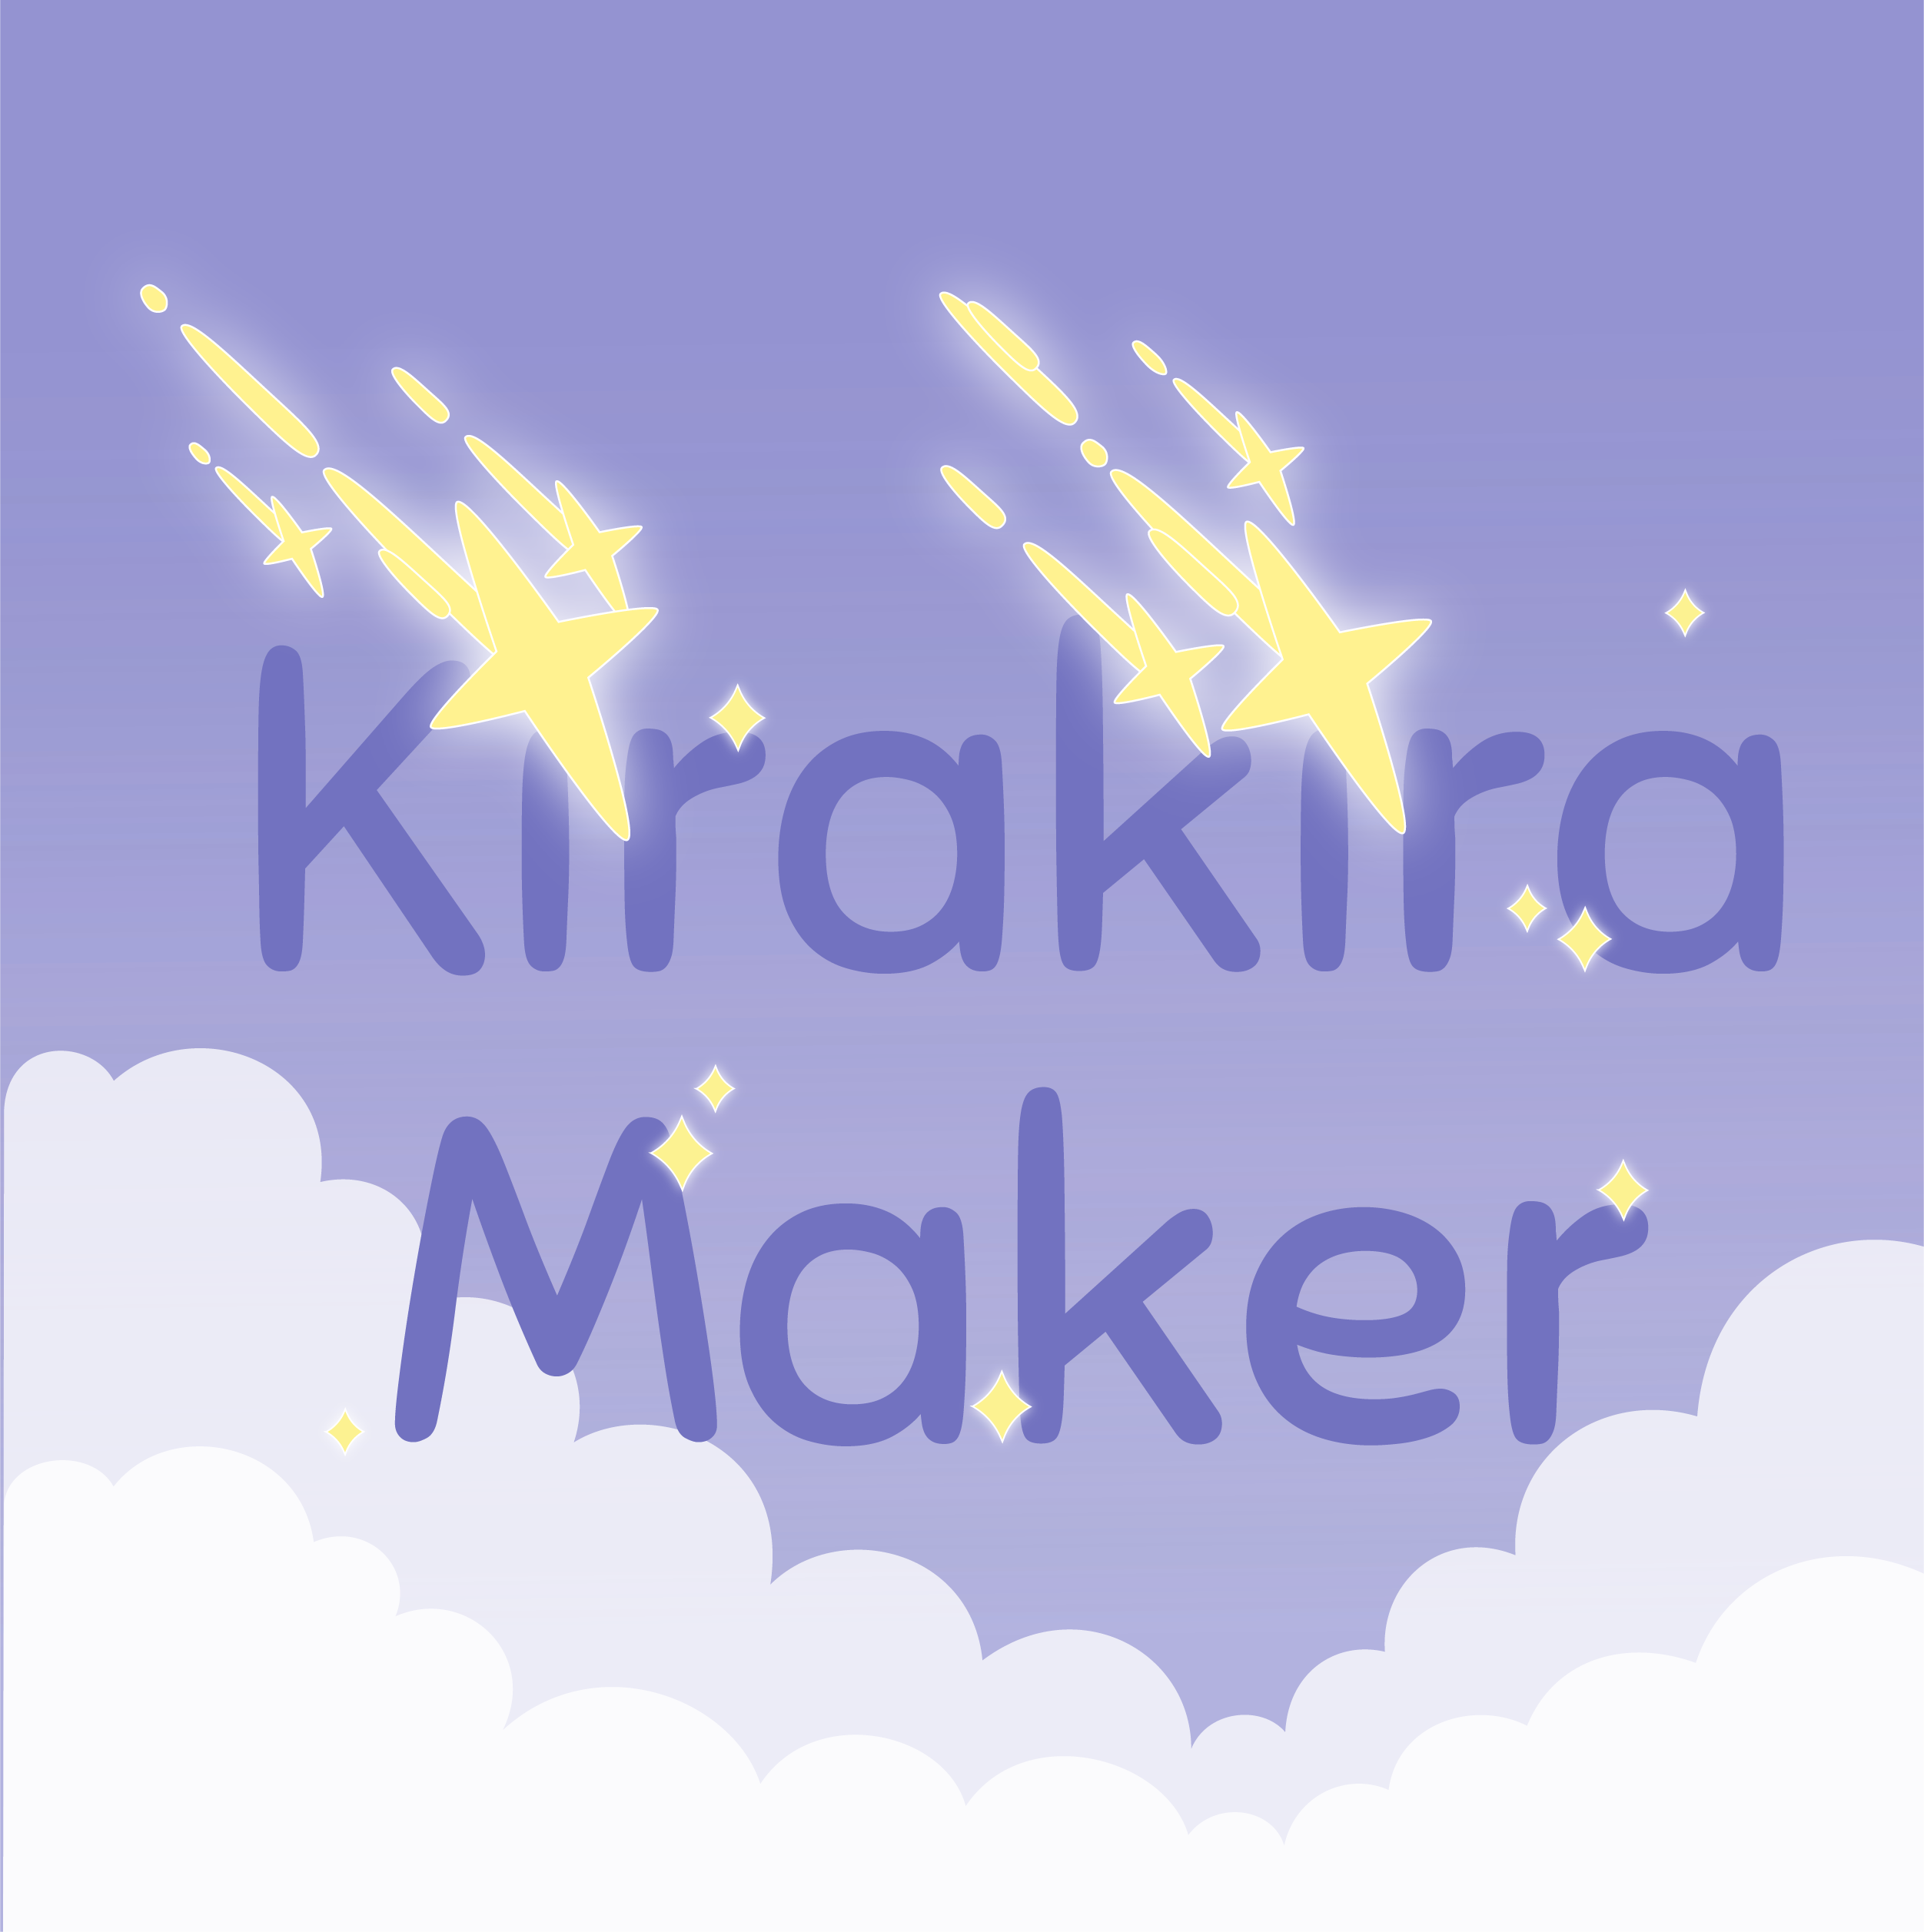 Kirakira Maker & Chocolona